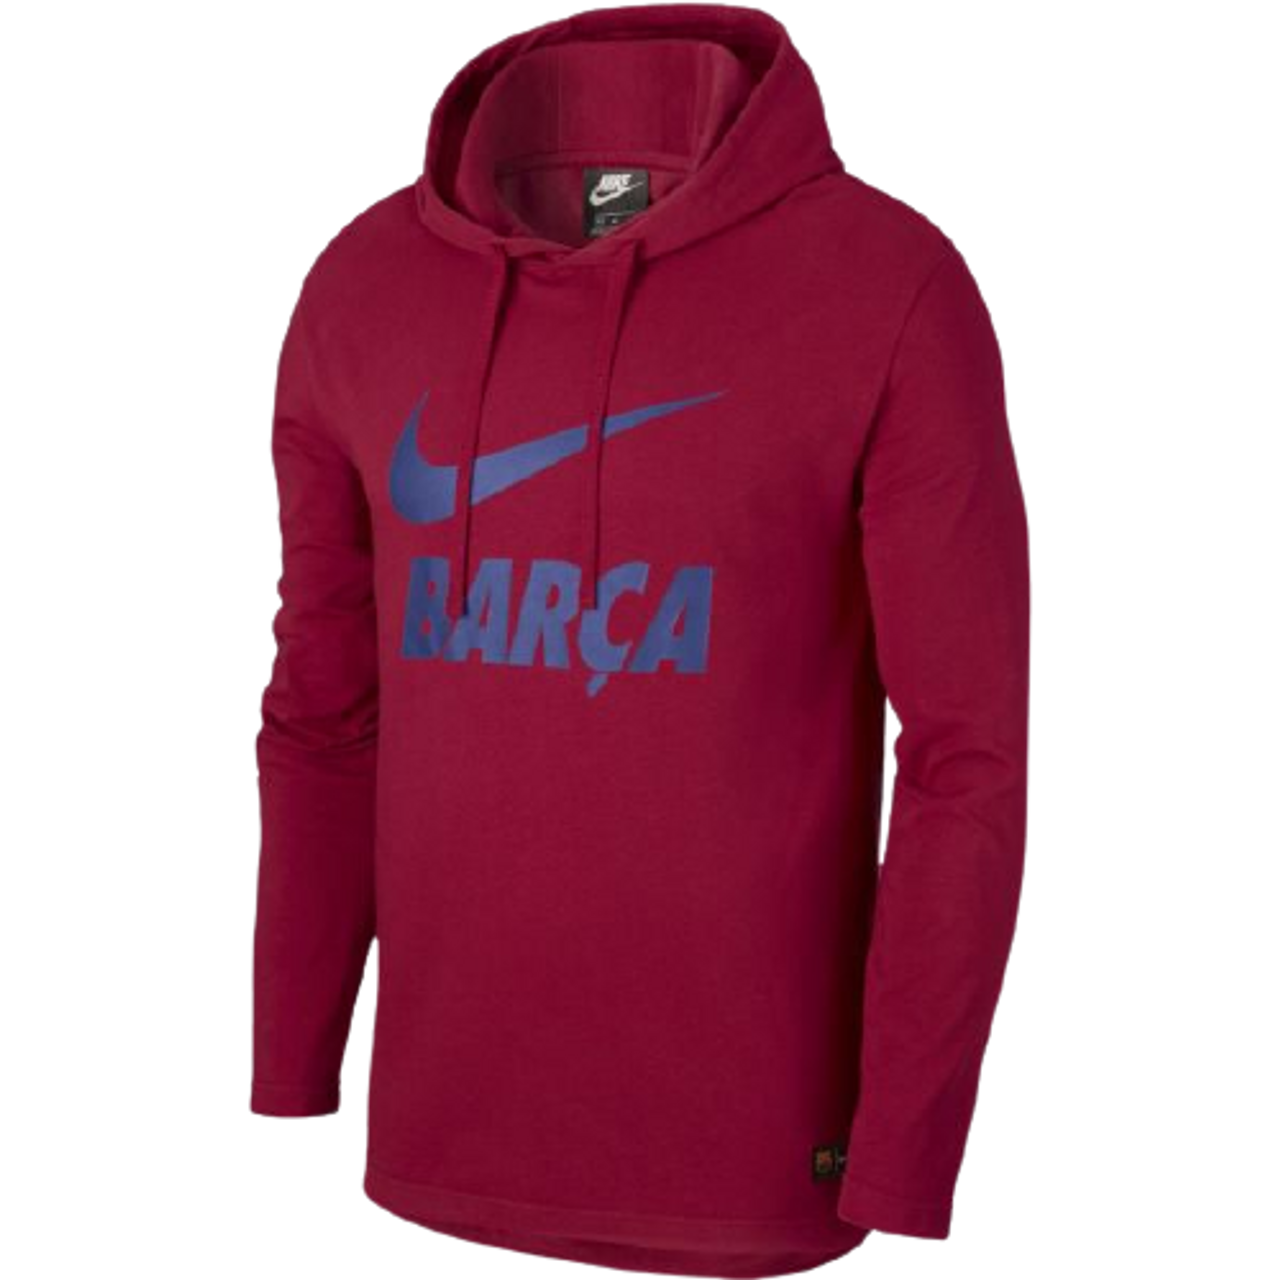 Nike Barca - Maroon